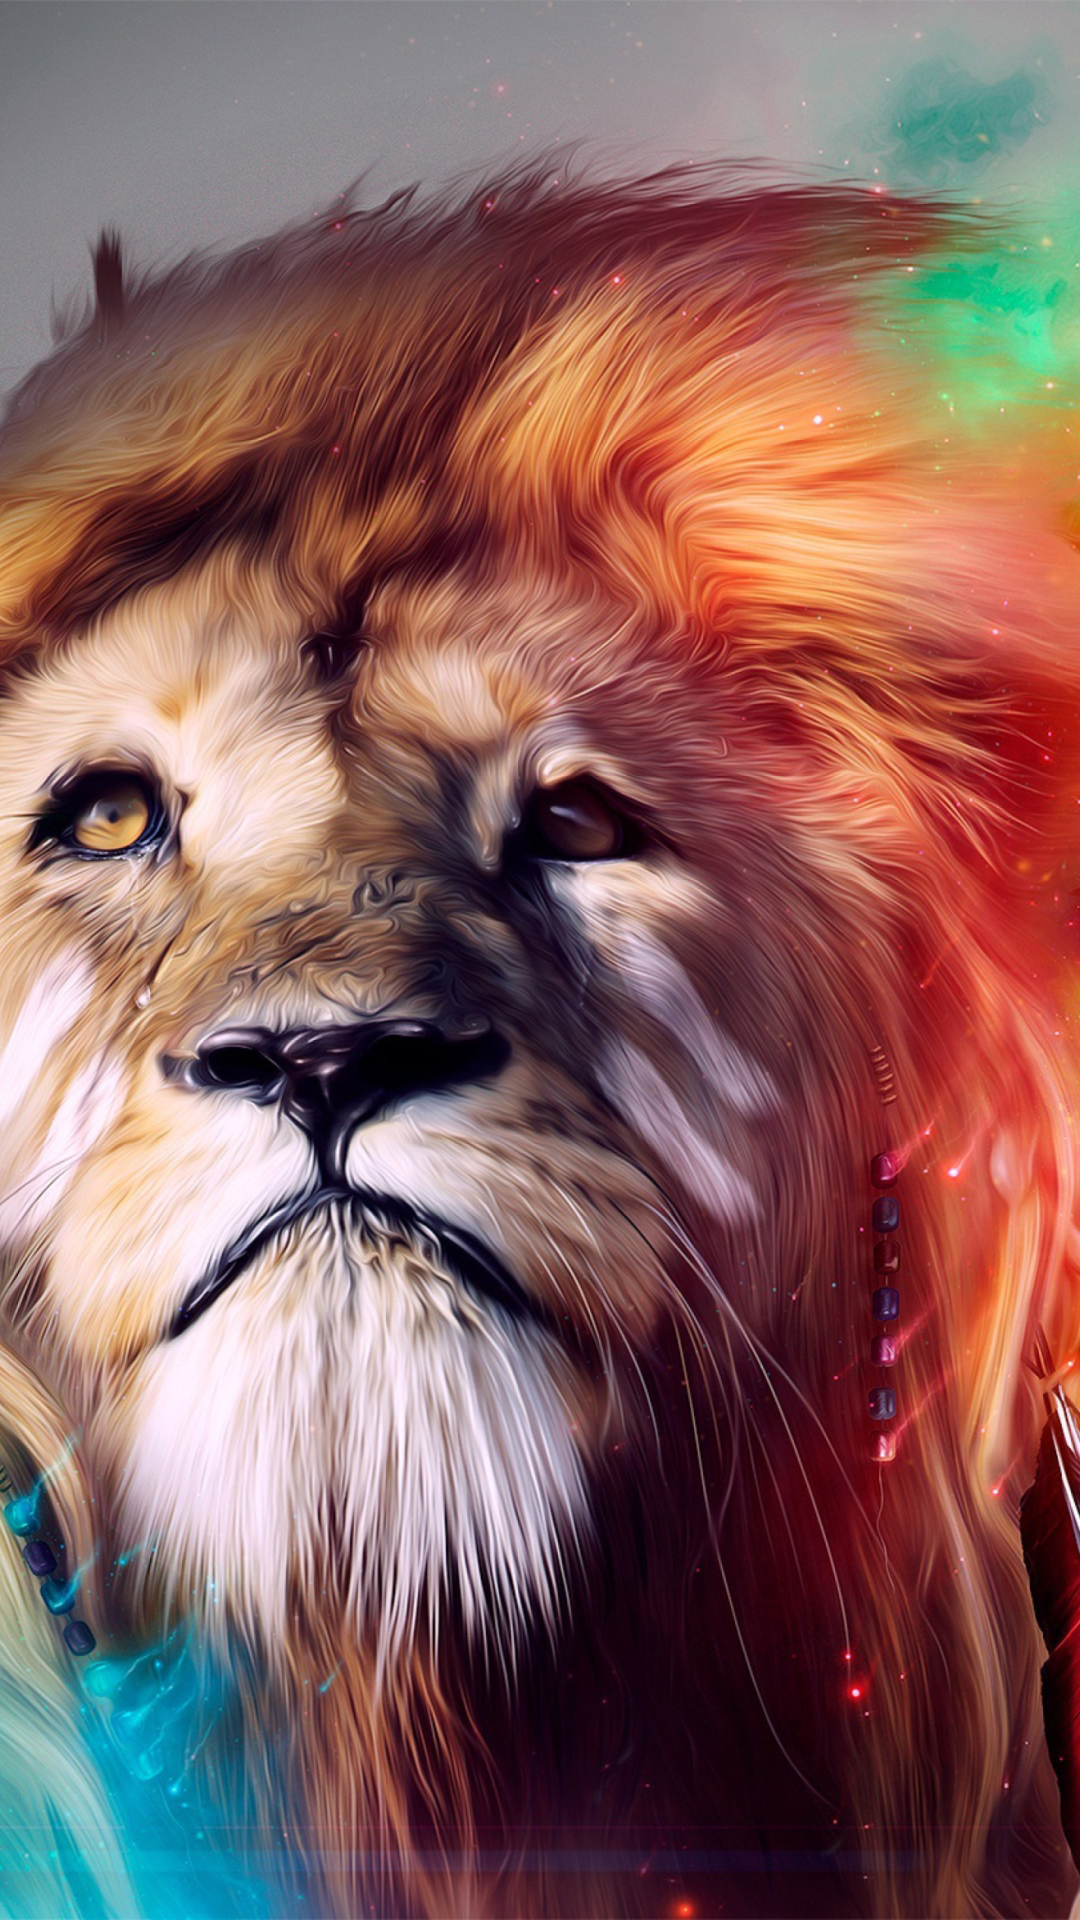 Lion Art Wallpaper for iPhone 6 Plus